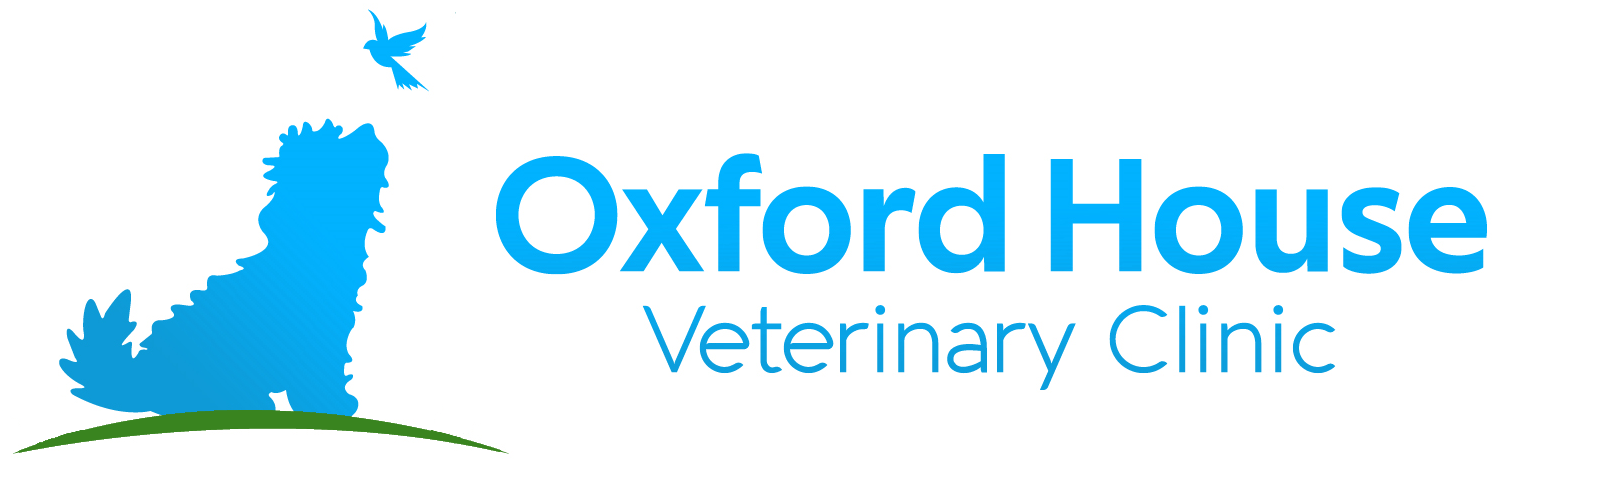 Oxford House Veterinary Clinic